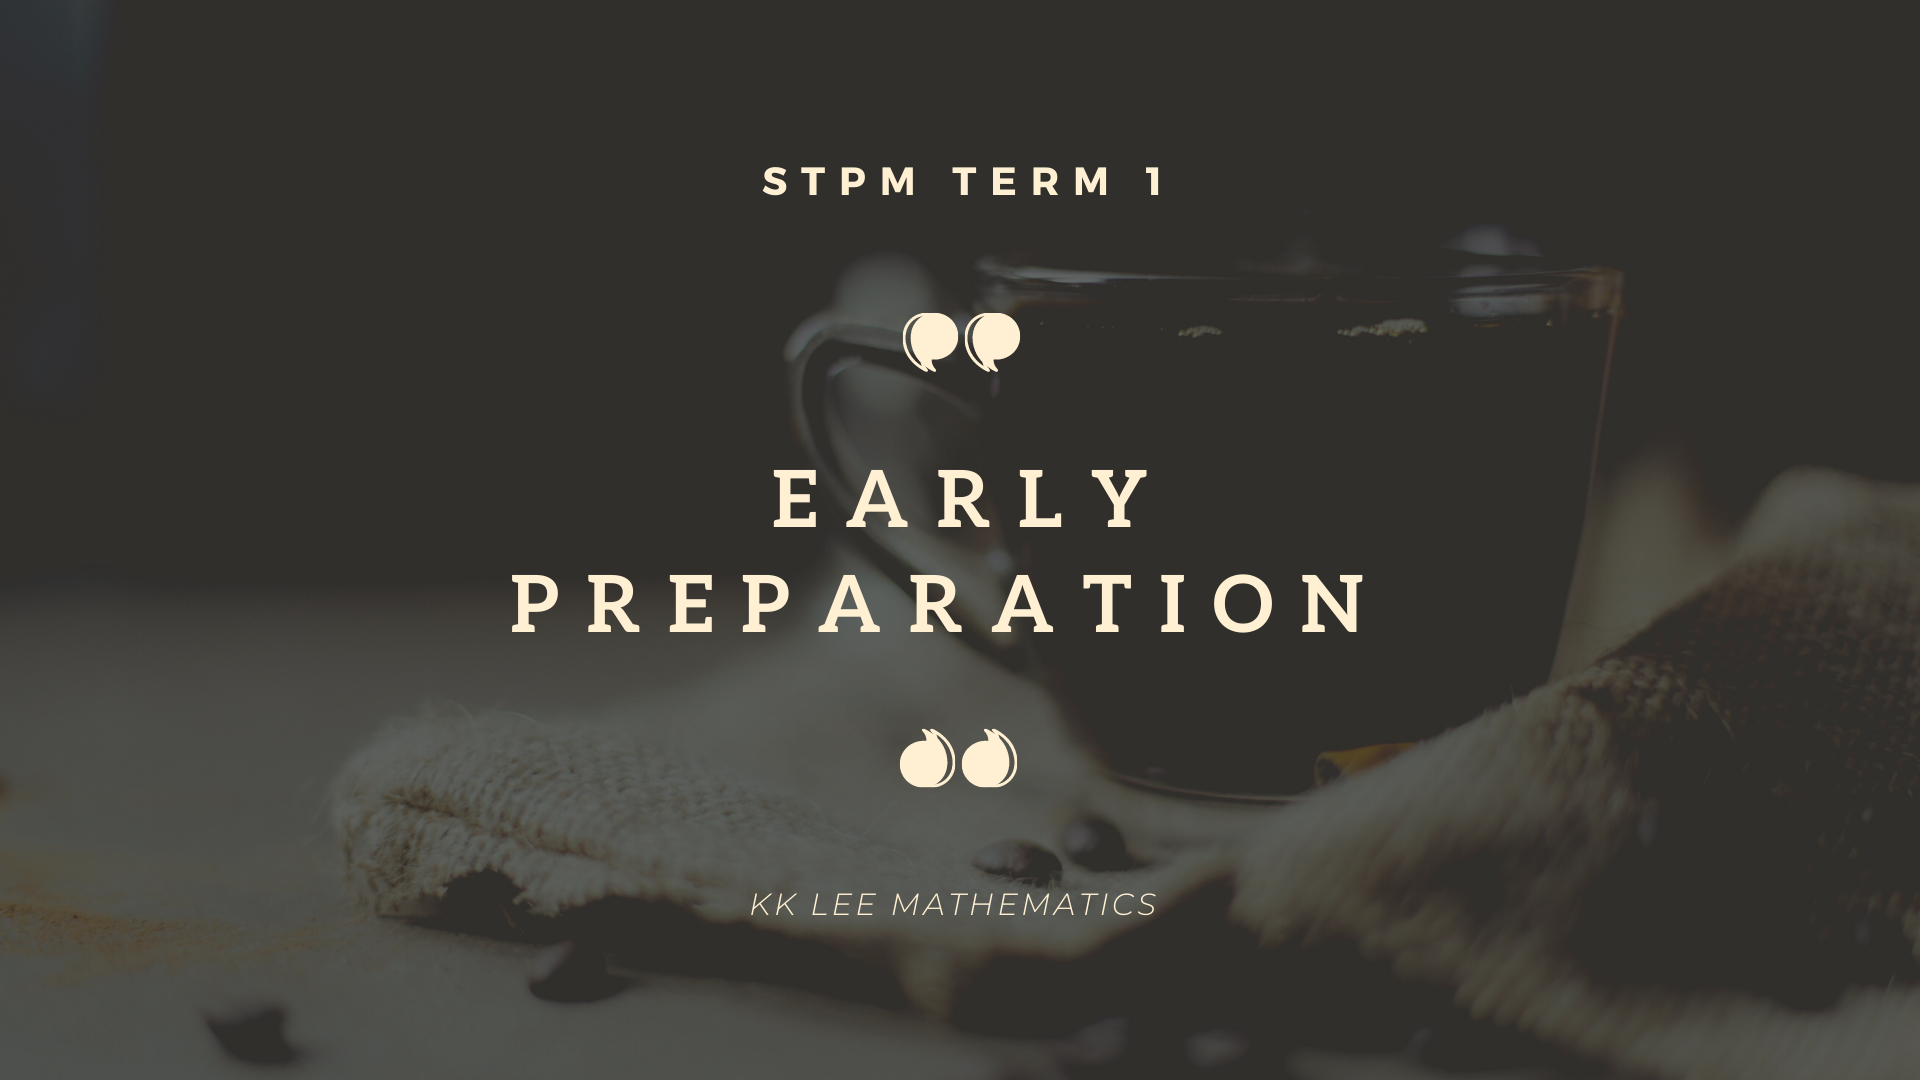 STPM Term 1 Early Preparation (KK LEE MATHEMATICS)